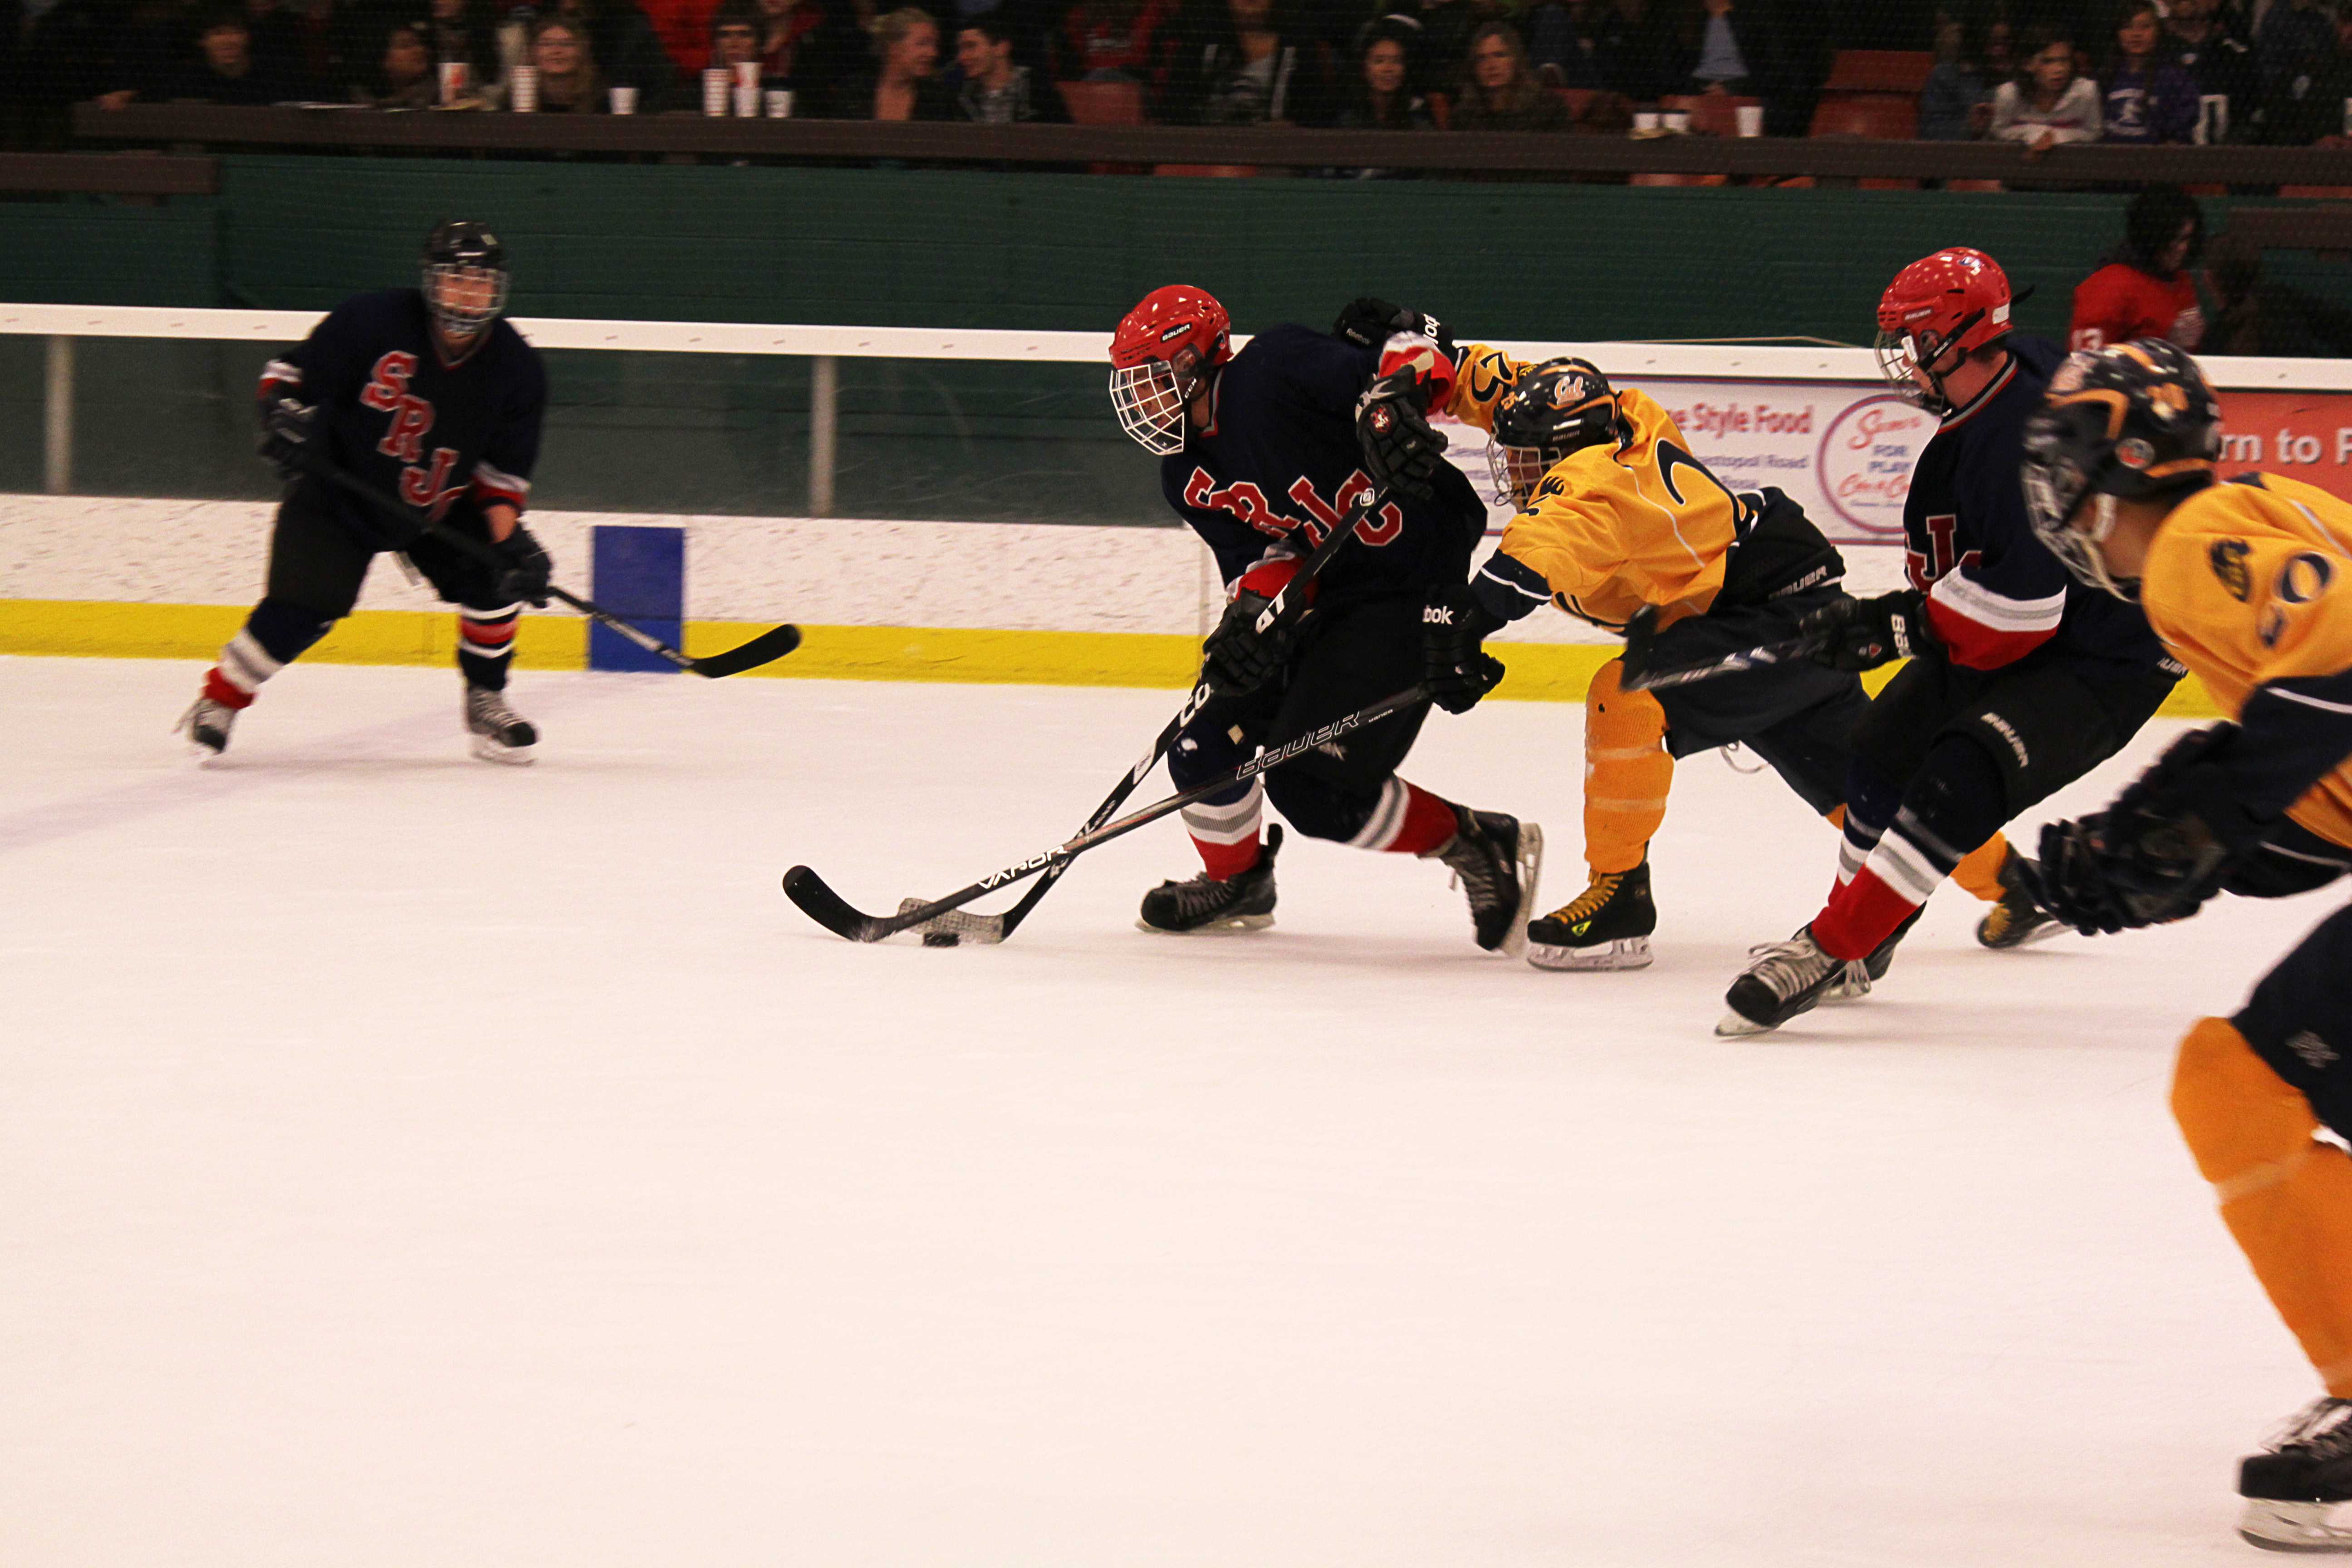 SRJC Hockey team "Bears Down" to upset Cal - The Oak Leaf